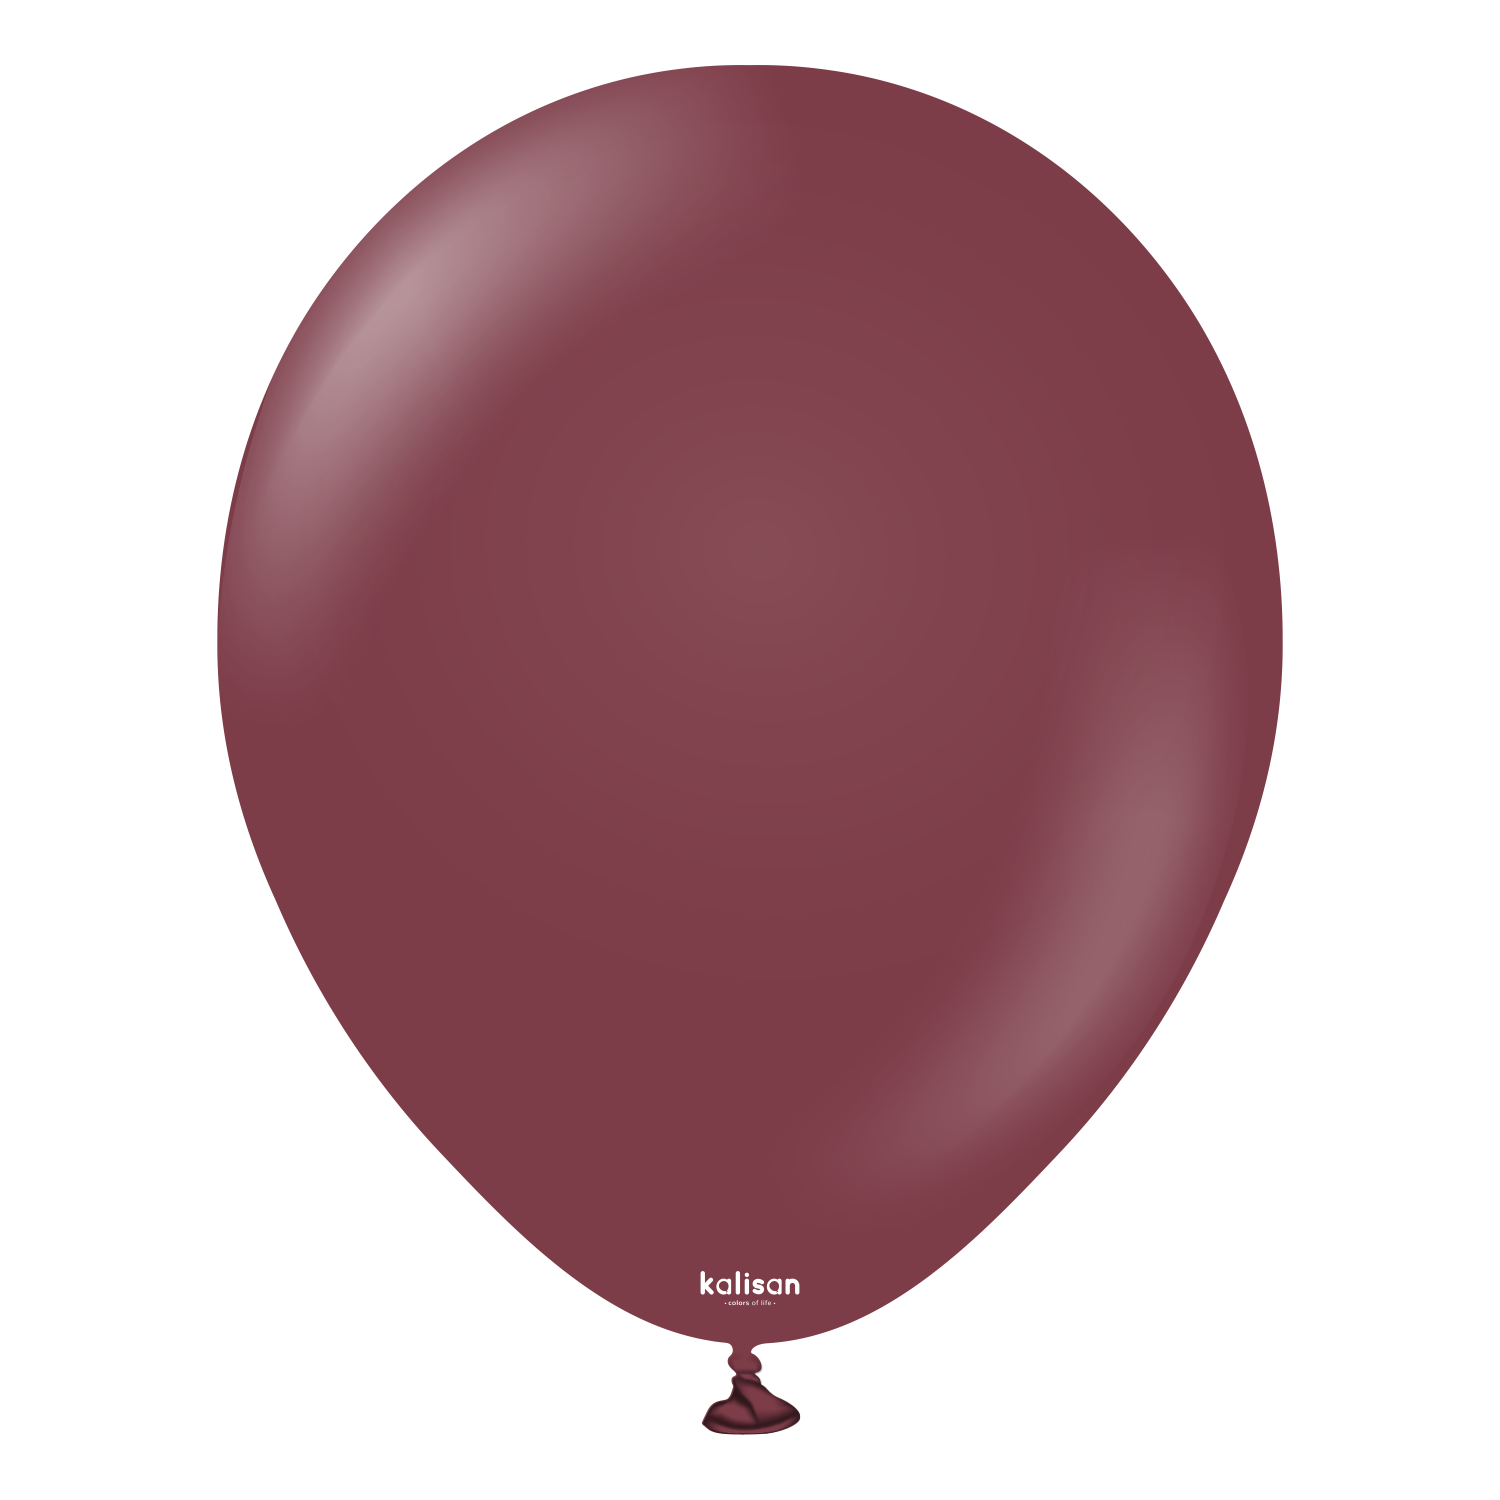 Premium lateksballong Kalisan i burgunder farge 